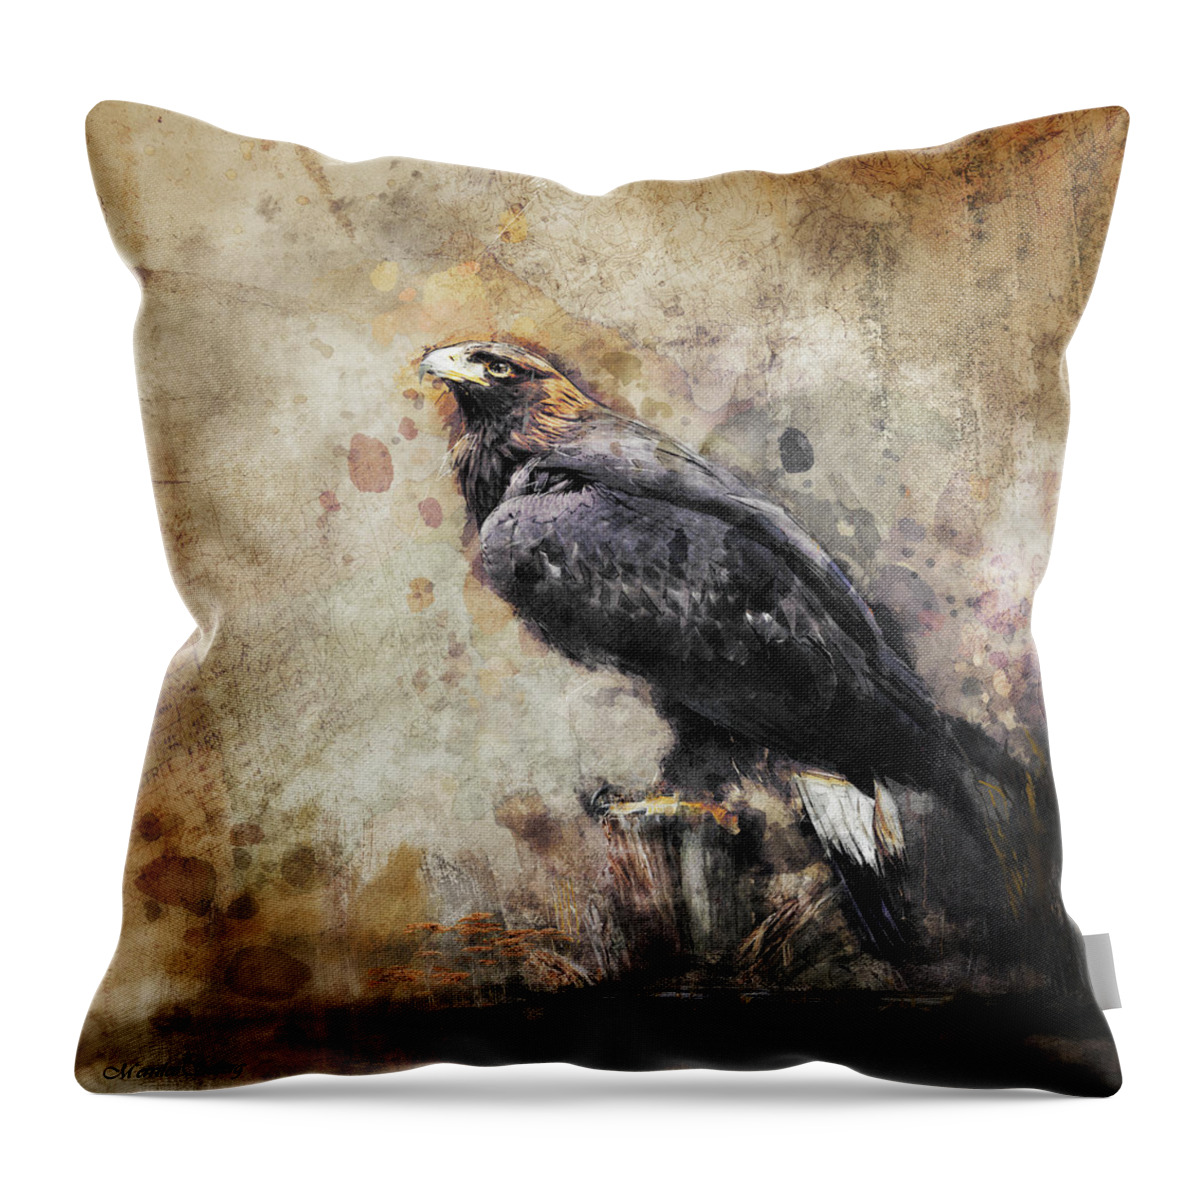 Bird Throw Pillow featuring the digital art Golden Eagle #1 by Merrilee Soberg